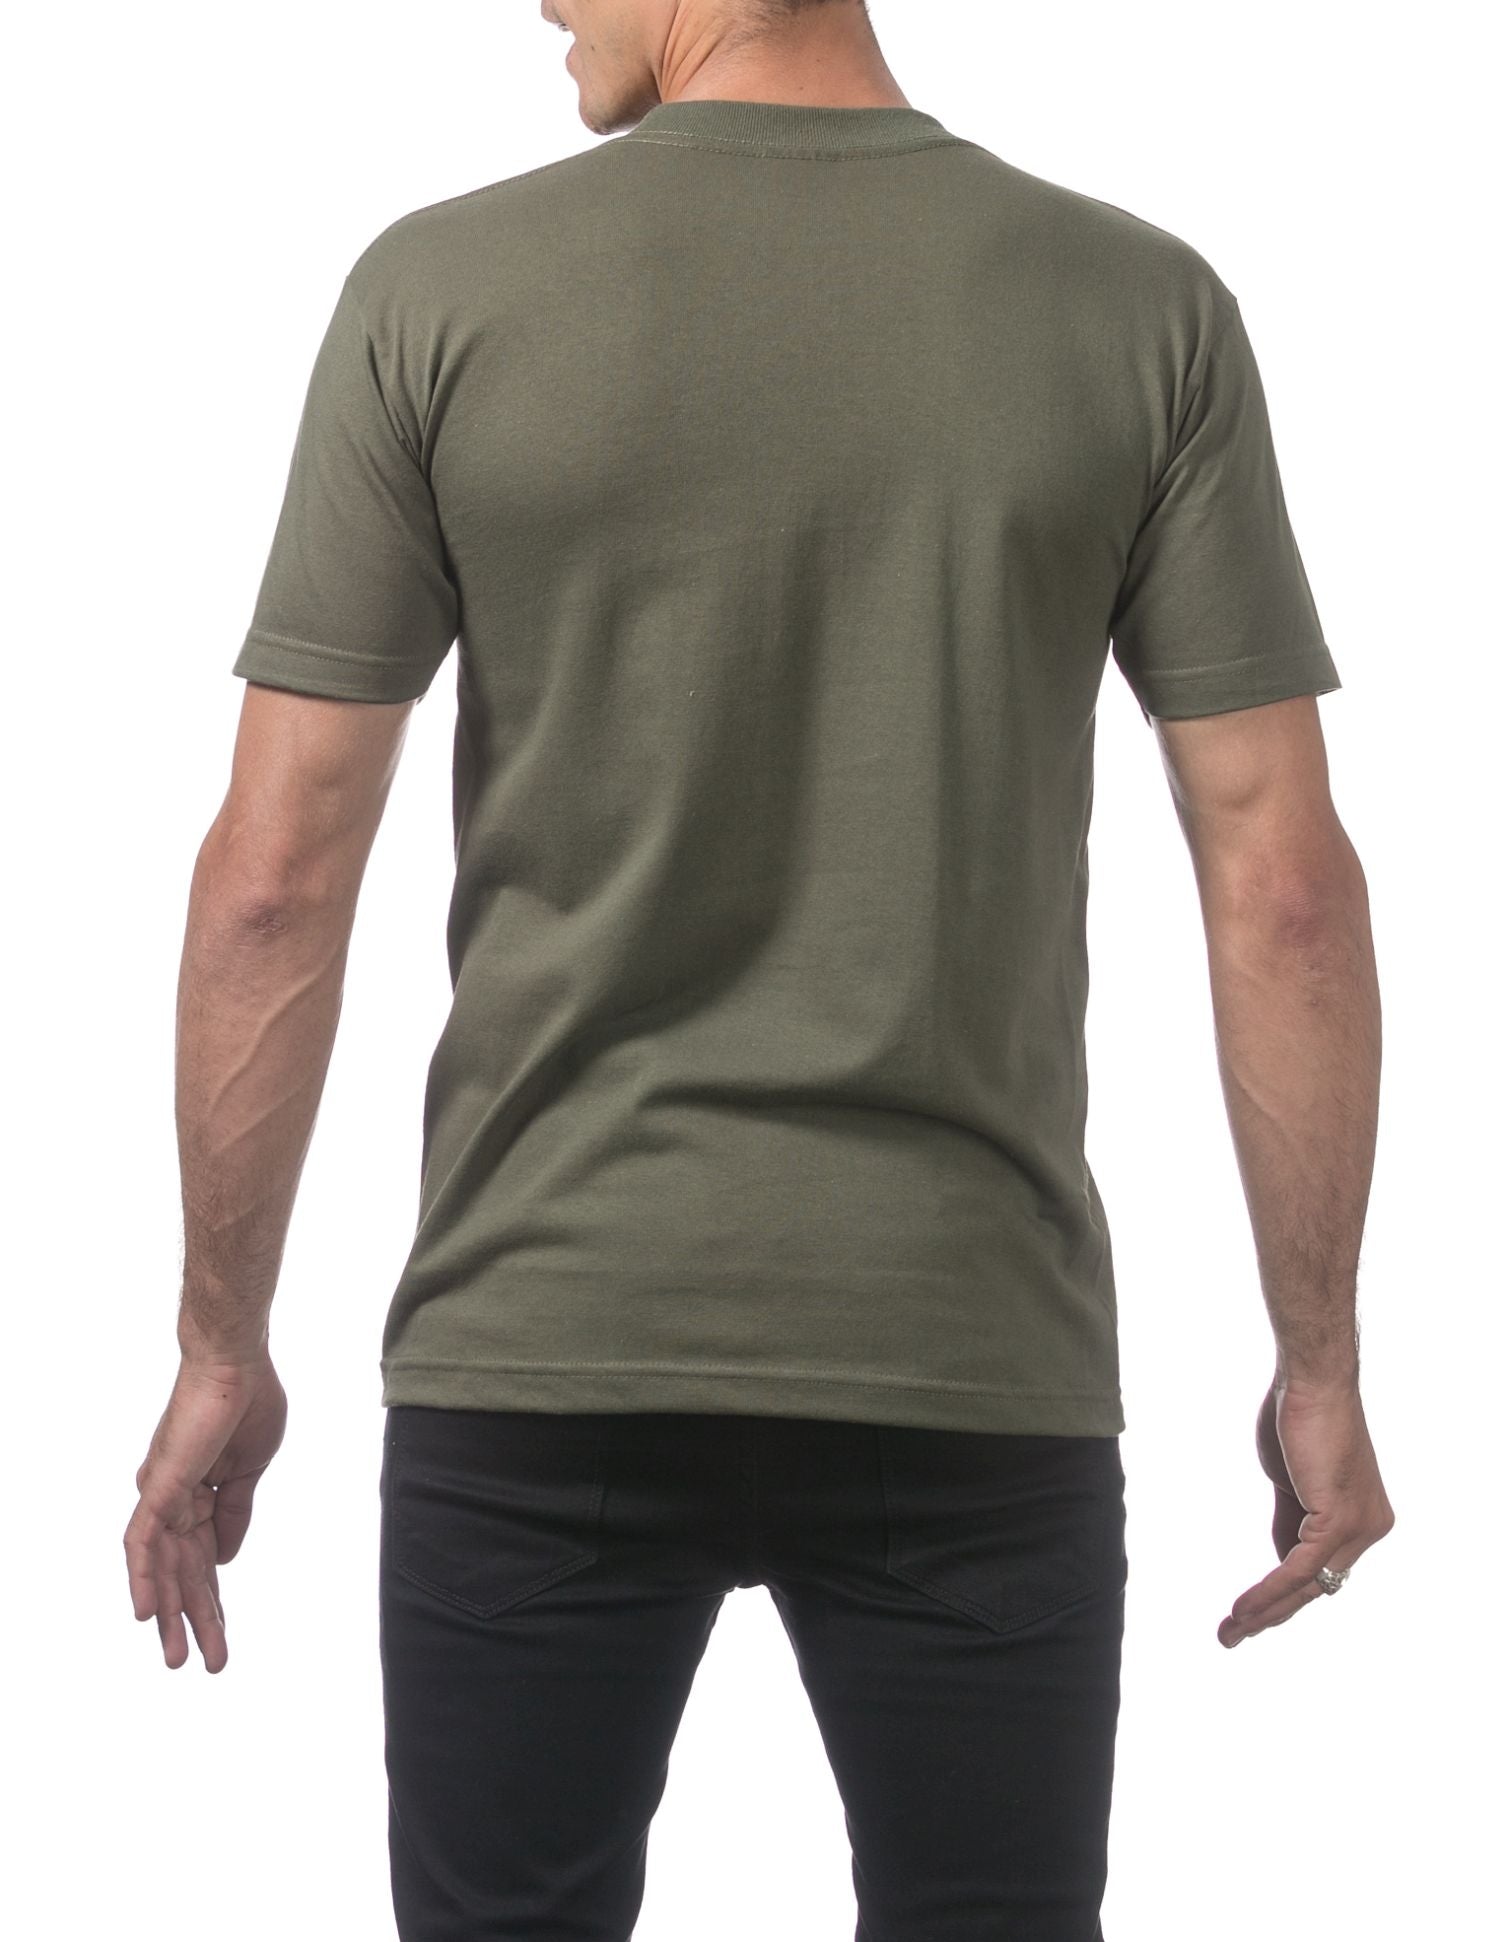 Pro Club Men's Comfort Cotton Short Sleeve T-Shirt - Olive Green - Large - Pro-Distributing